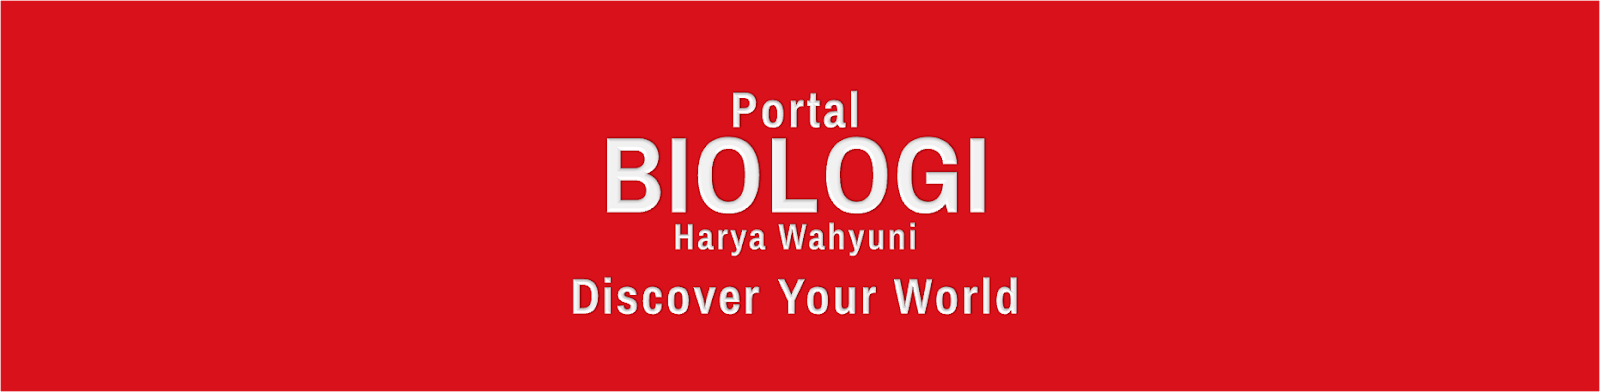 Portal Biologi - Harya Wahyuni